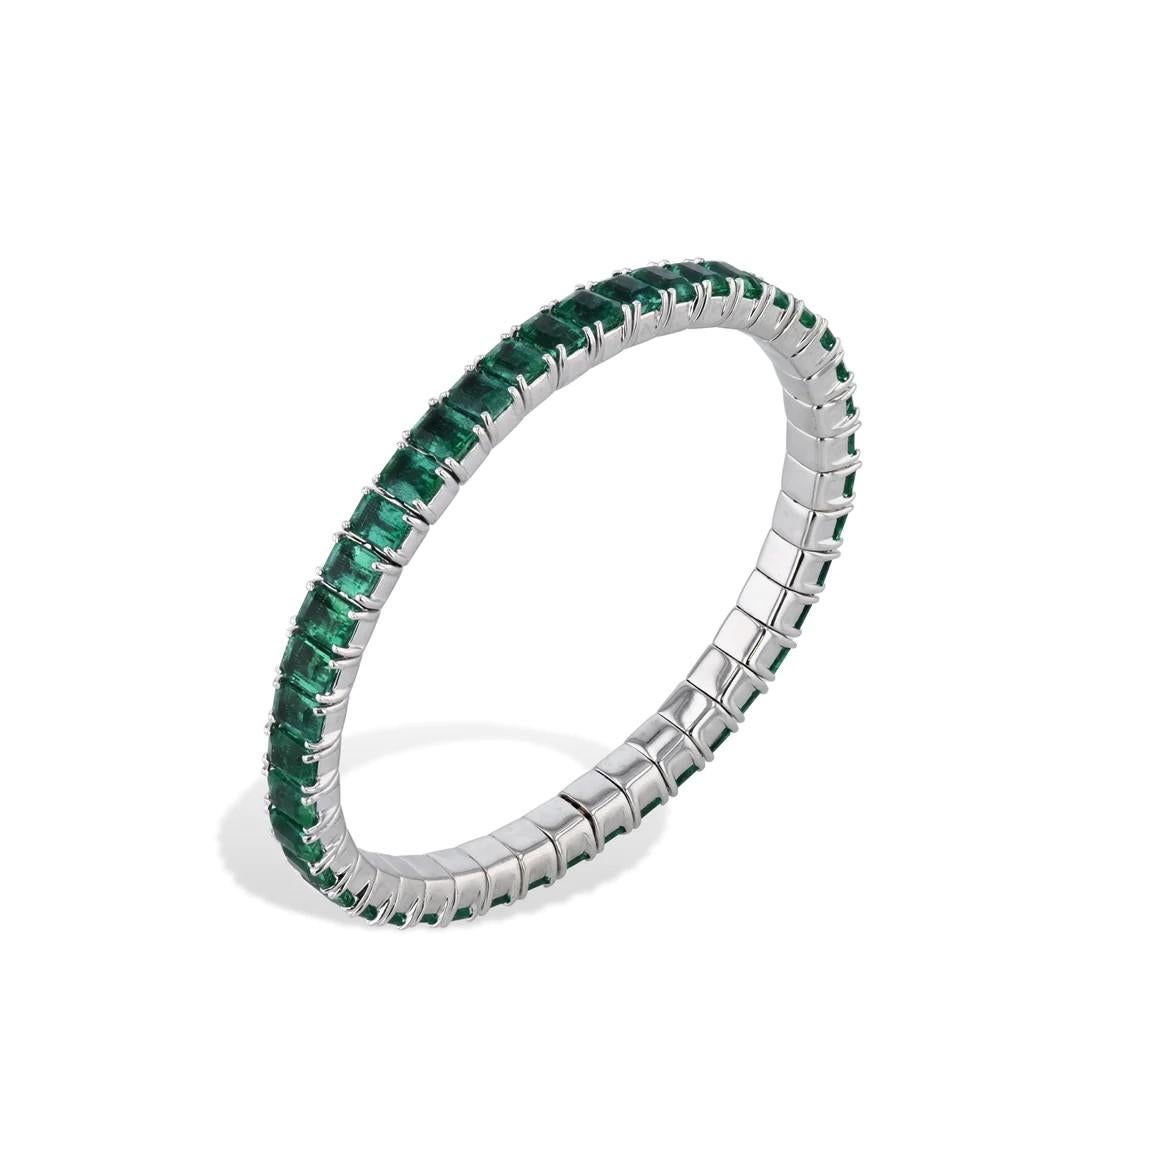 Emerald Cut 18.30 Carat Emerald 18 Karat White Gold Stretch Tennis Bracelet For Sale